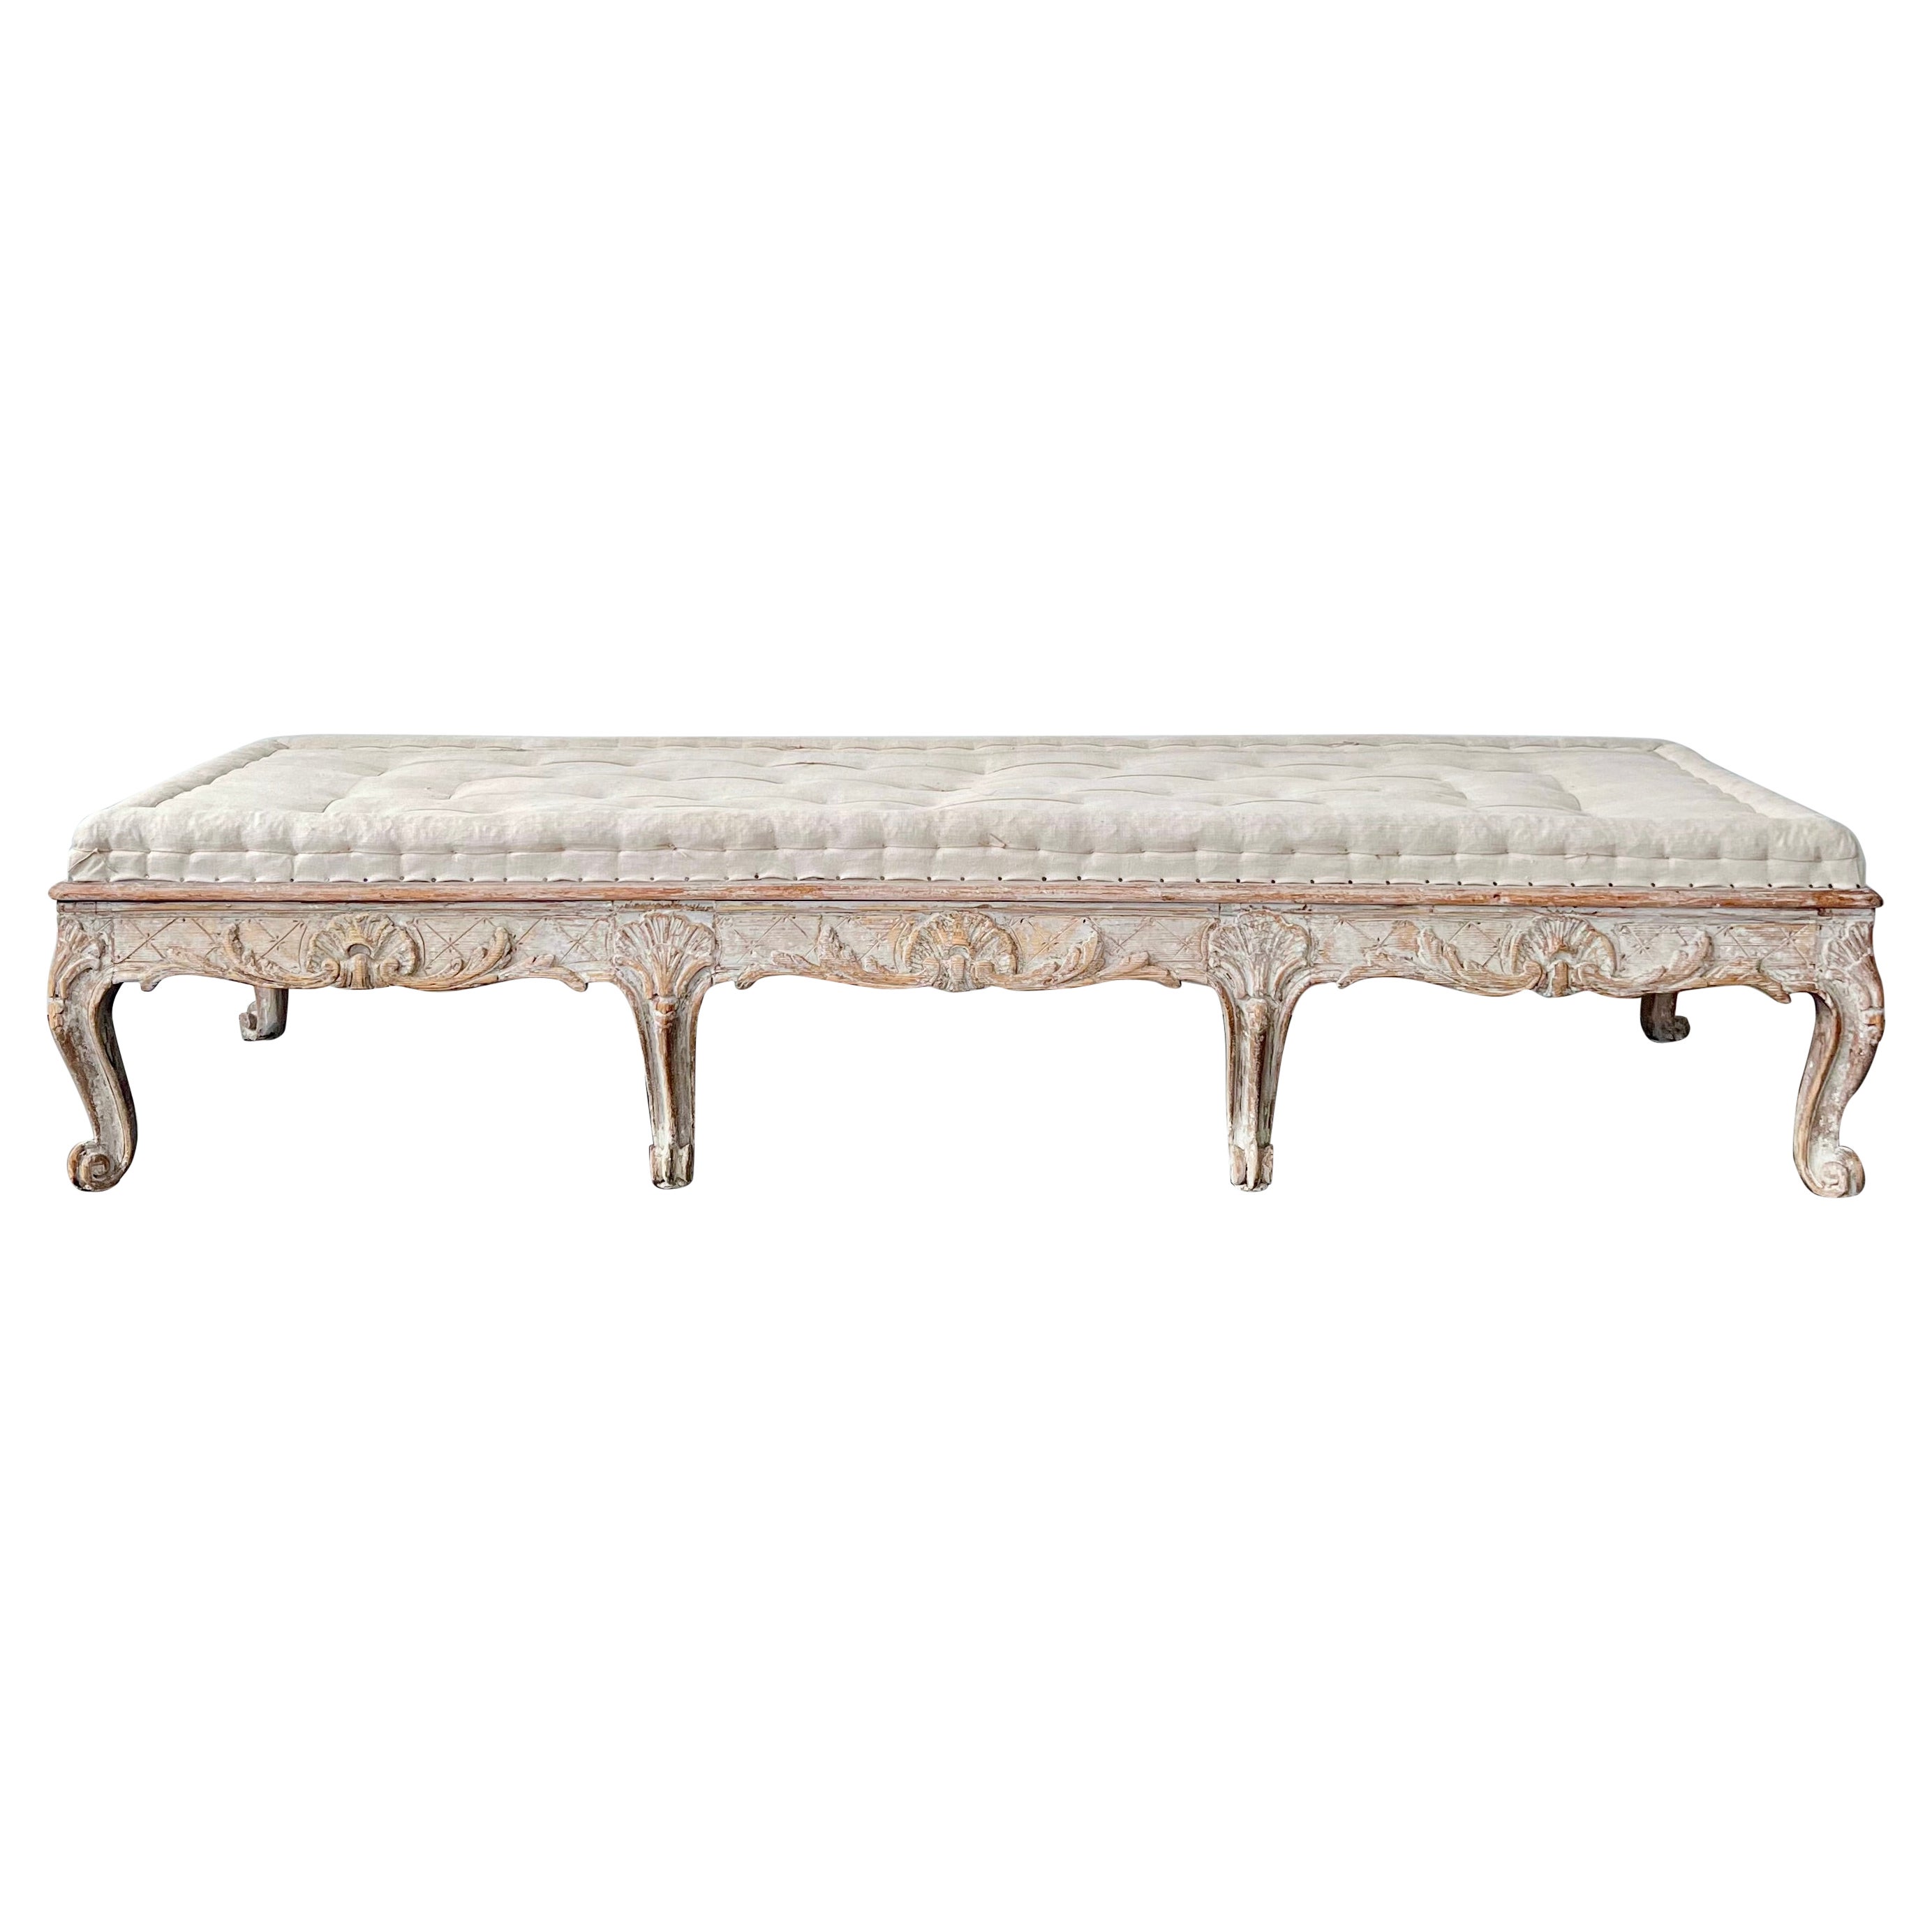 18th century Swedish Rococo Period Long Sofa Bench 1760 For Sale